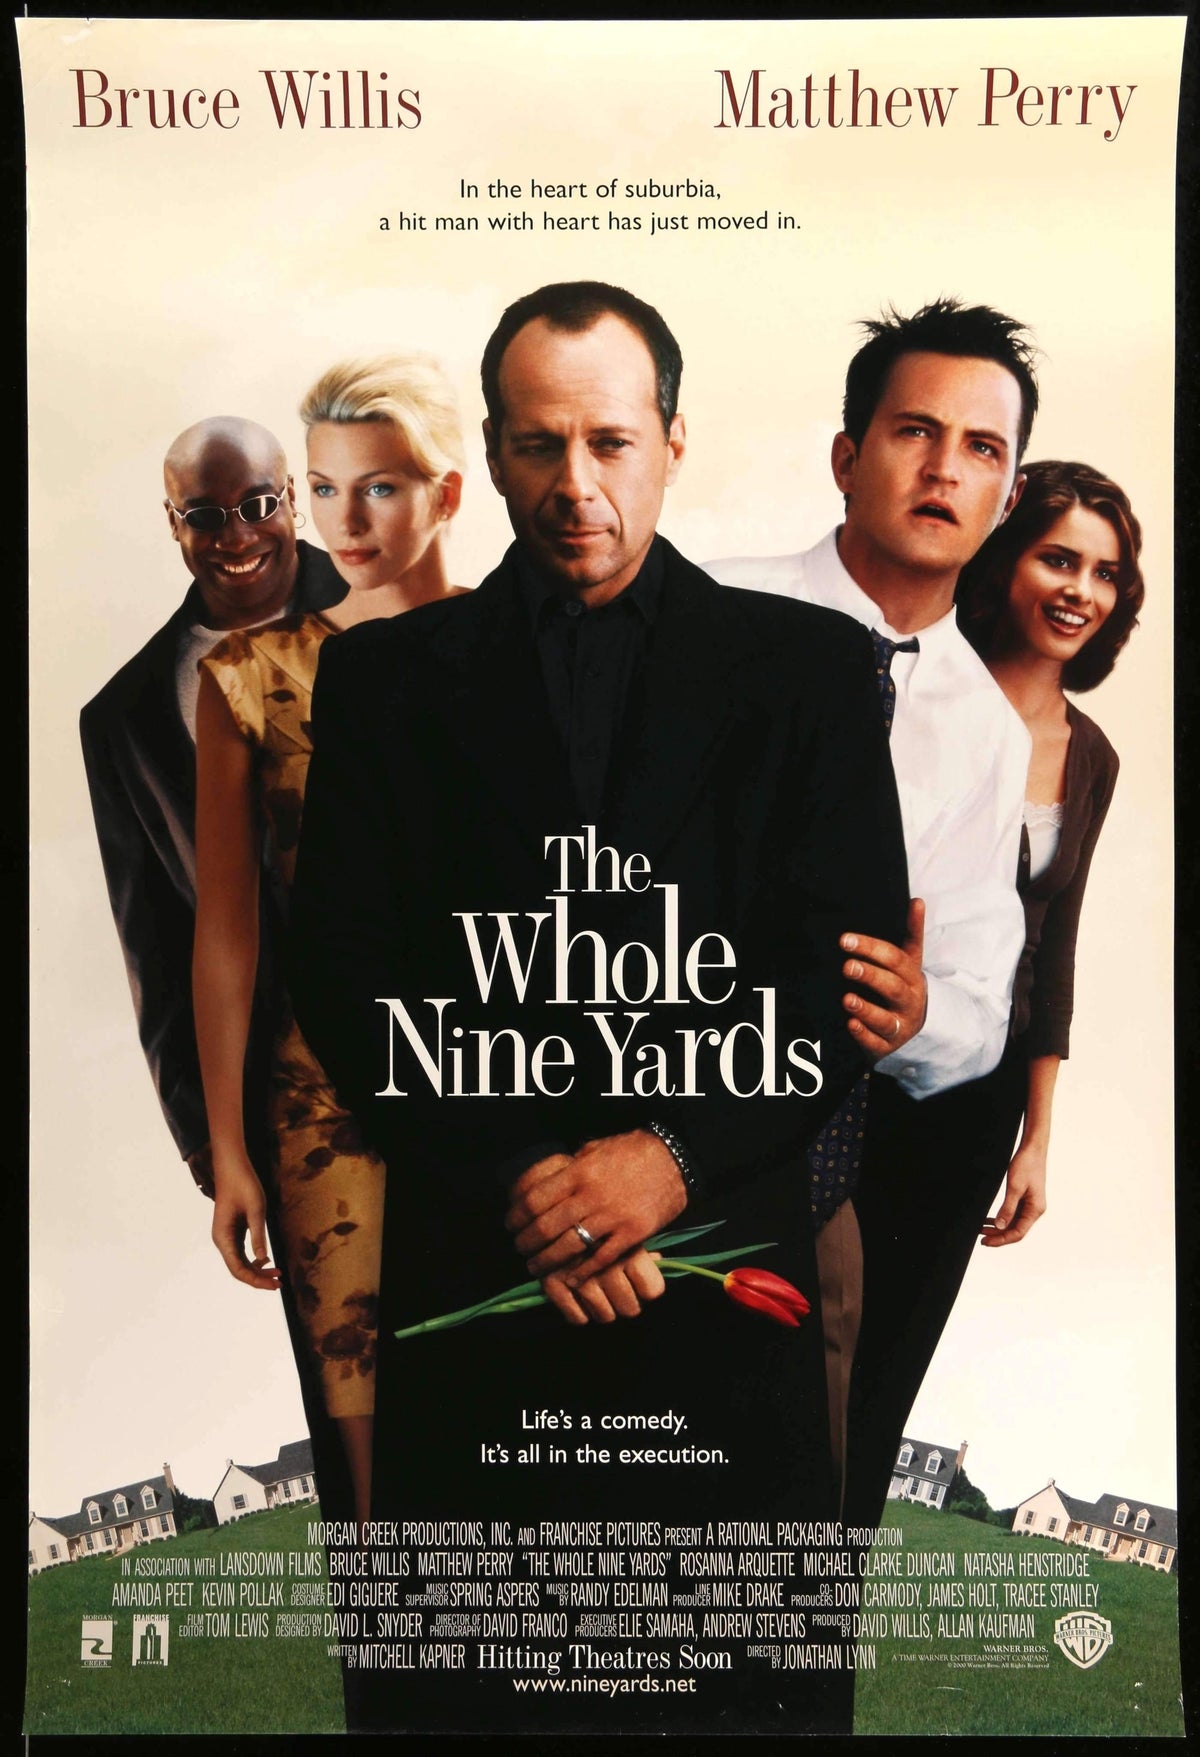 Whole Nine Yards (2000) original movie poster for sale at Original Film Art